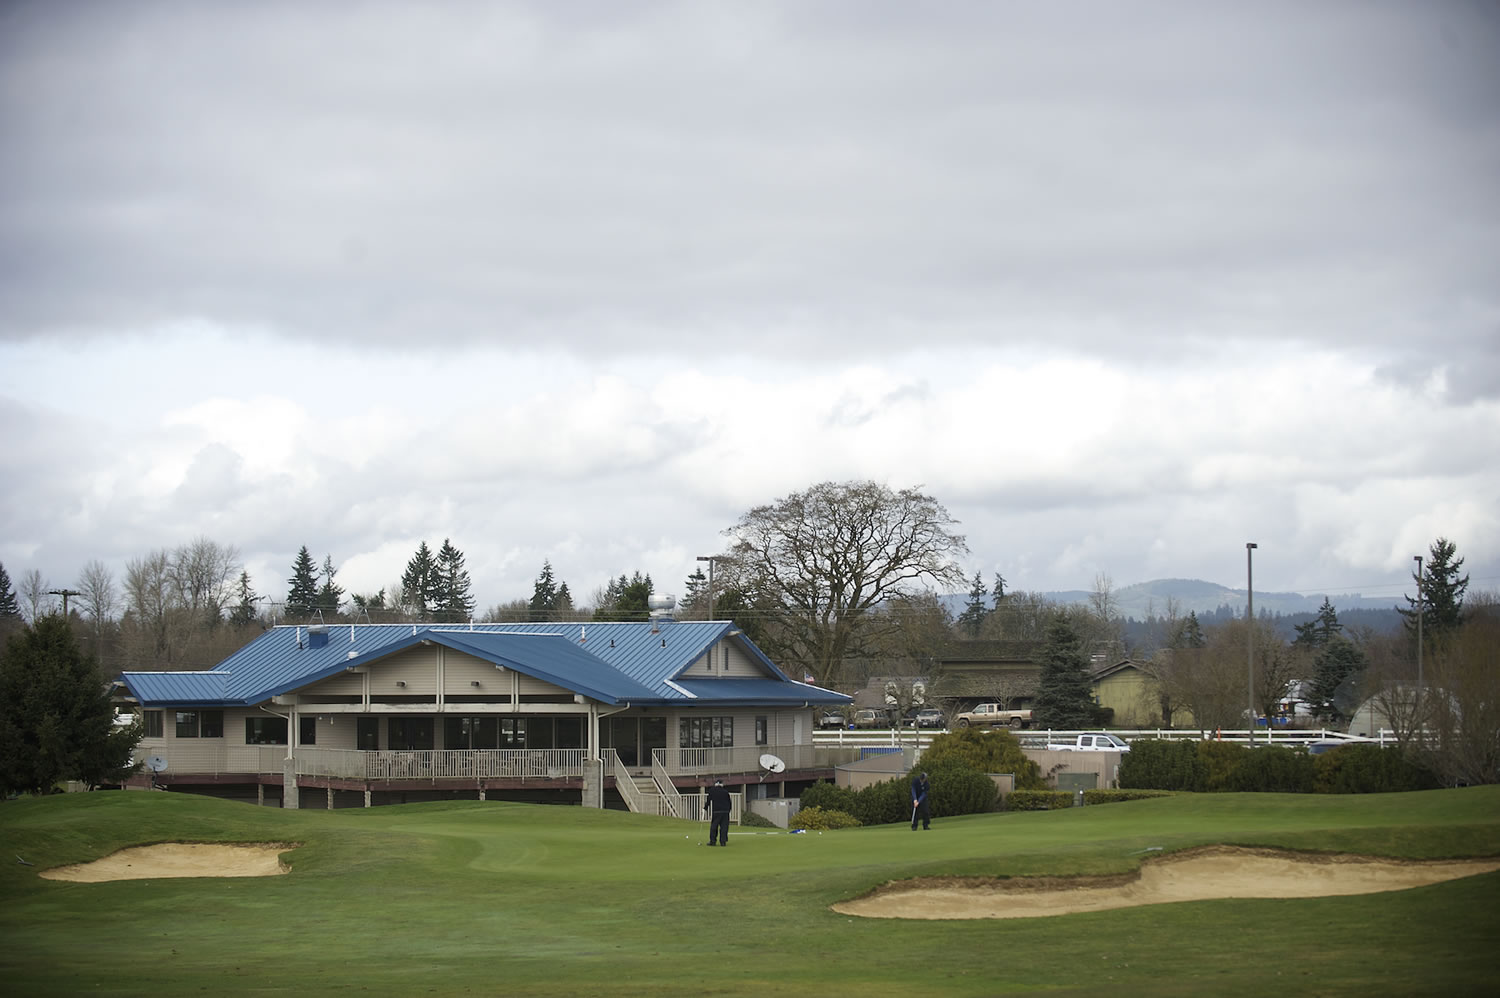 18th hole at Tri-Mountain Golf Course